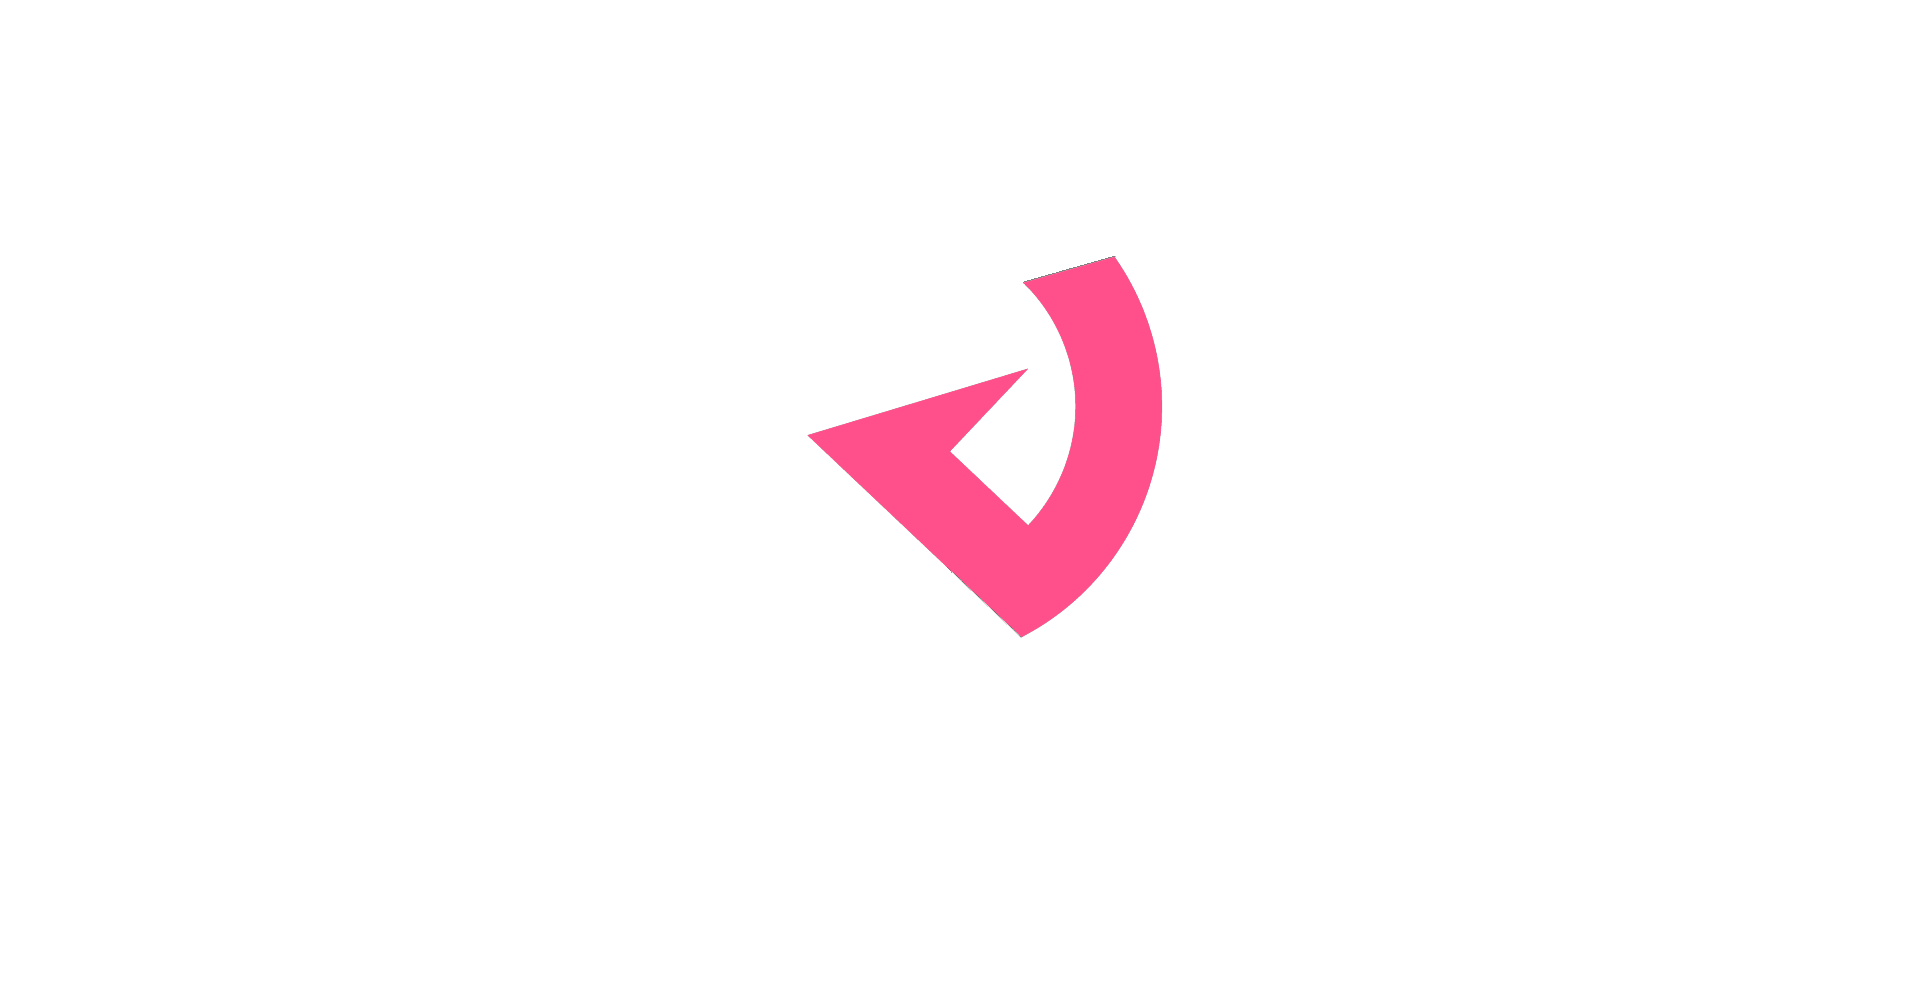 Cowana Gaming recommends LeetDesk gaming desks